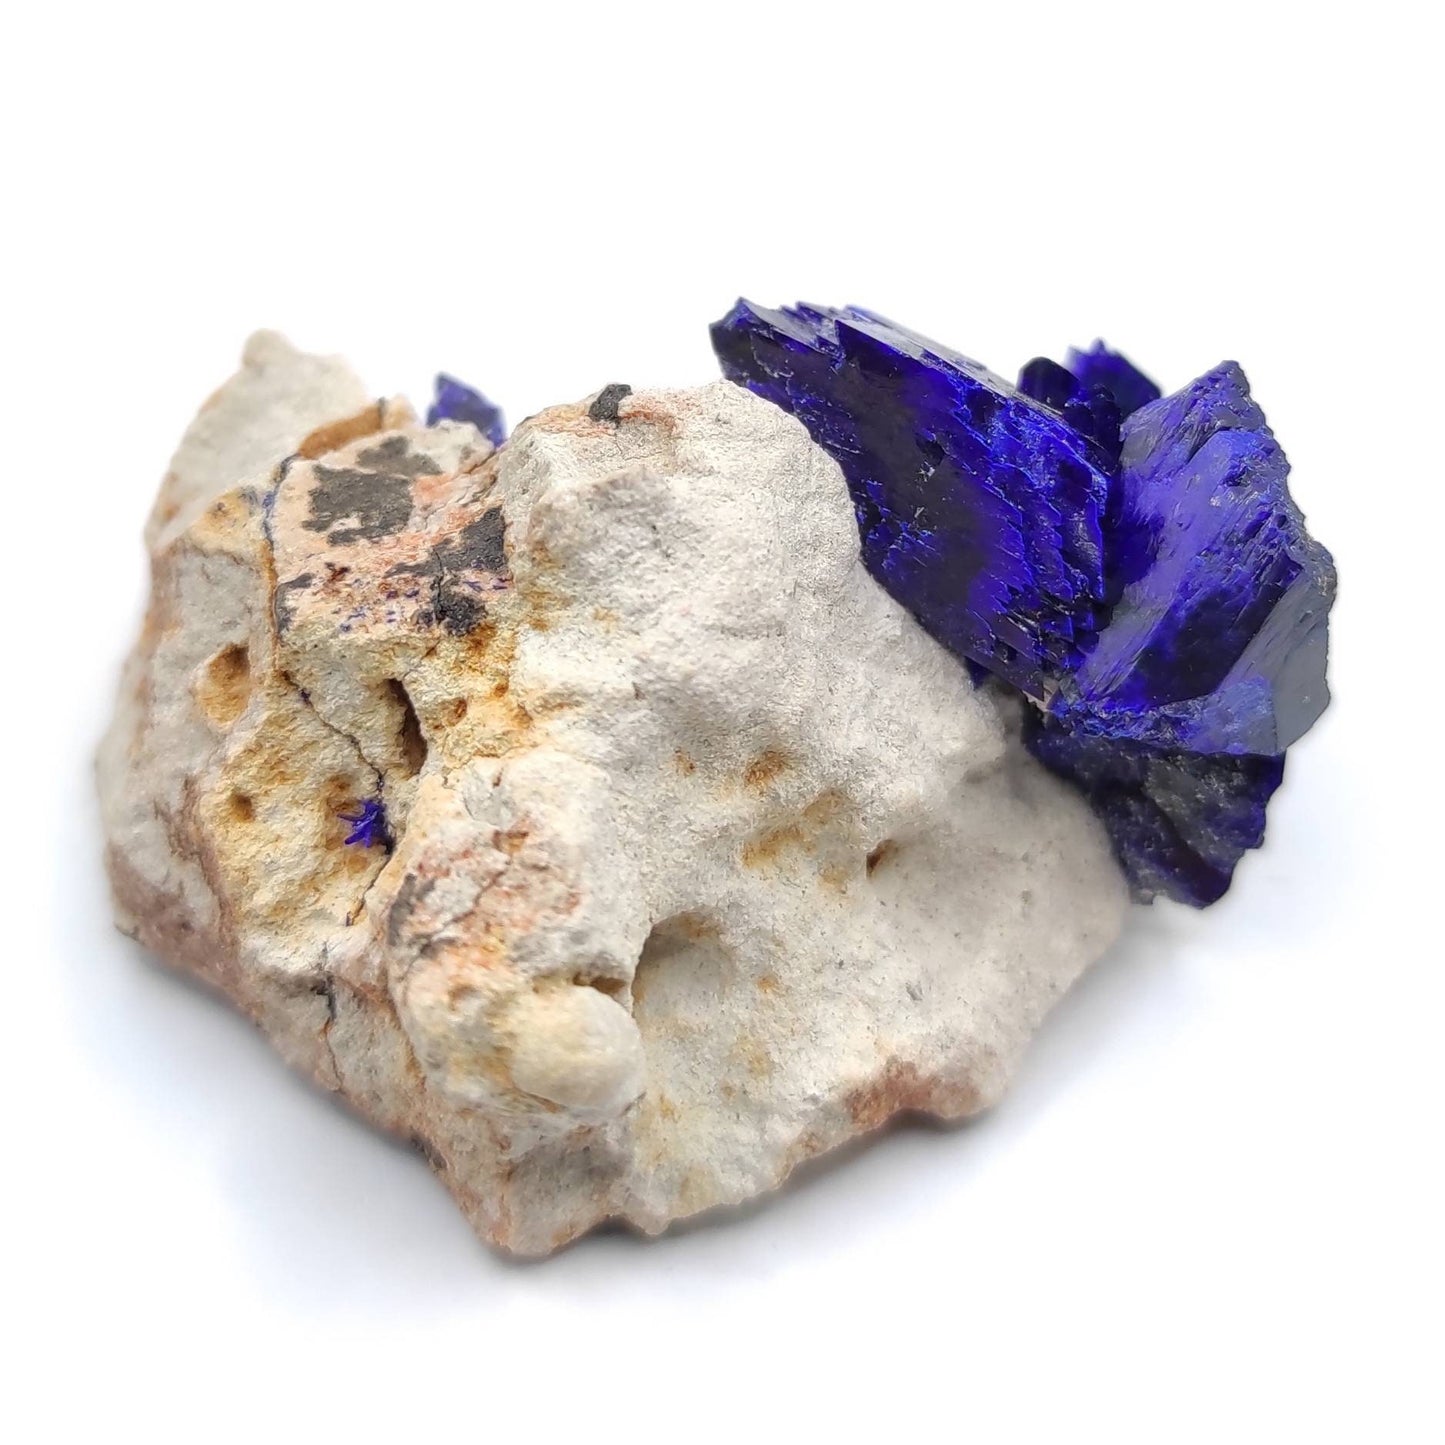 22g Azurite in Matrix - Kerrouchen, Morocco - Blue Azurite Specimen in Matrix - Crystallized Blue Azurite - High Quality Azurite Mineral